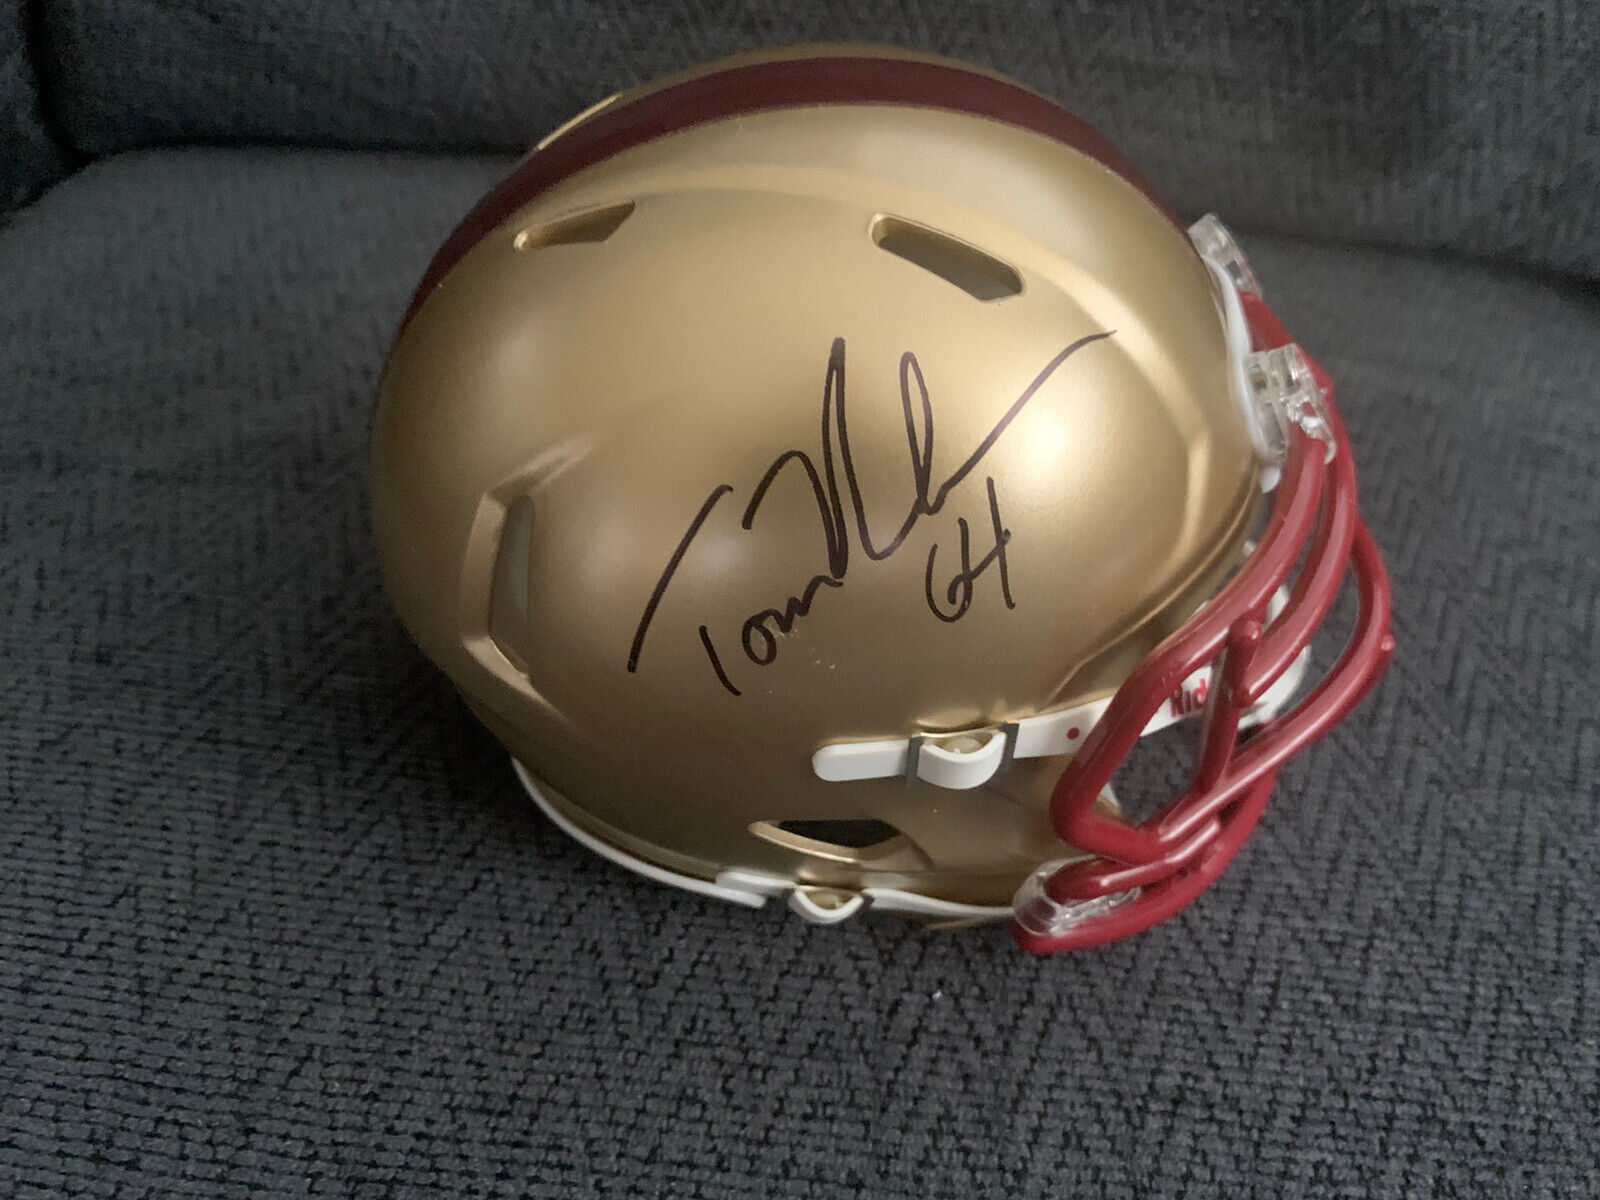 Tom Nalen Signed Mini Helmet Autographed Boston College Denver Broncos